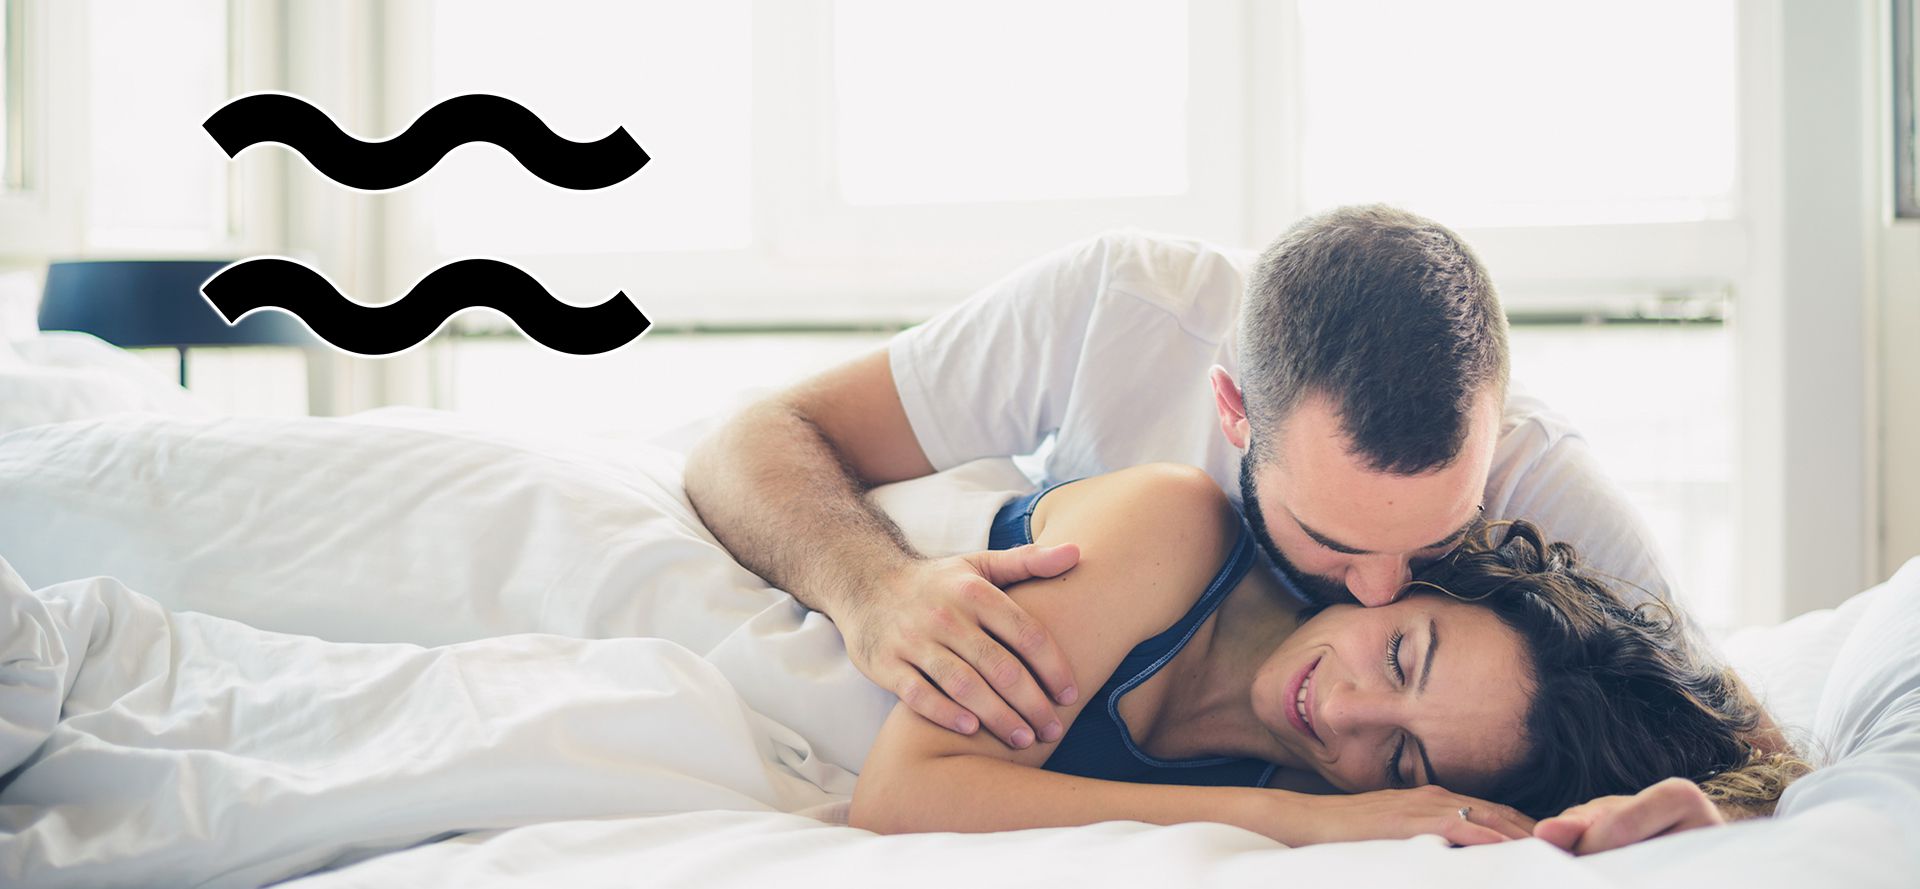 Aquarius man kissing a woman in Bed.